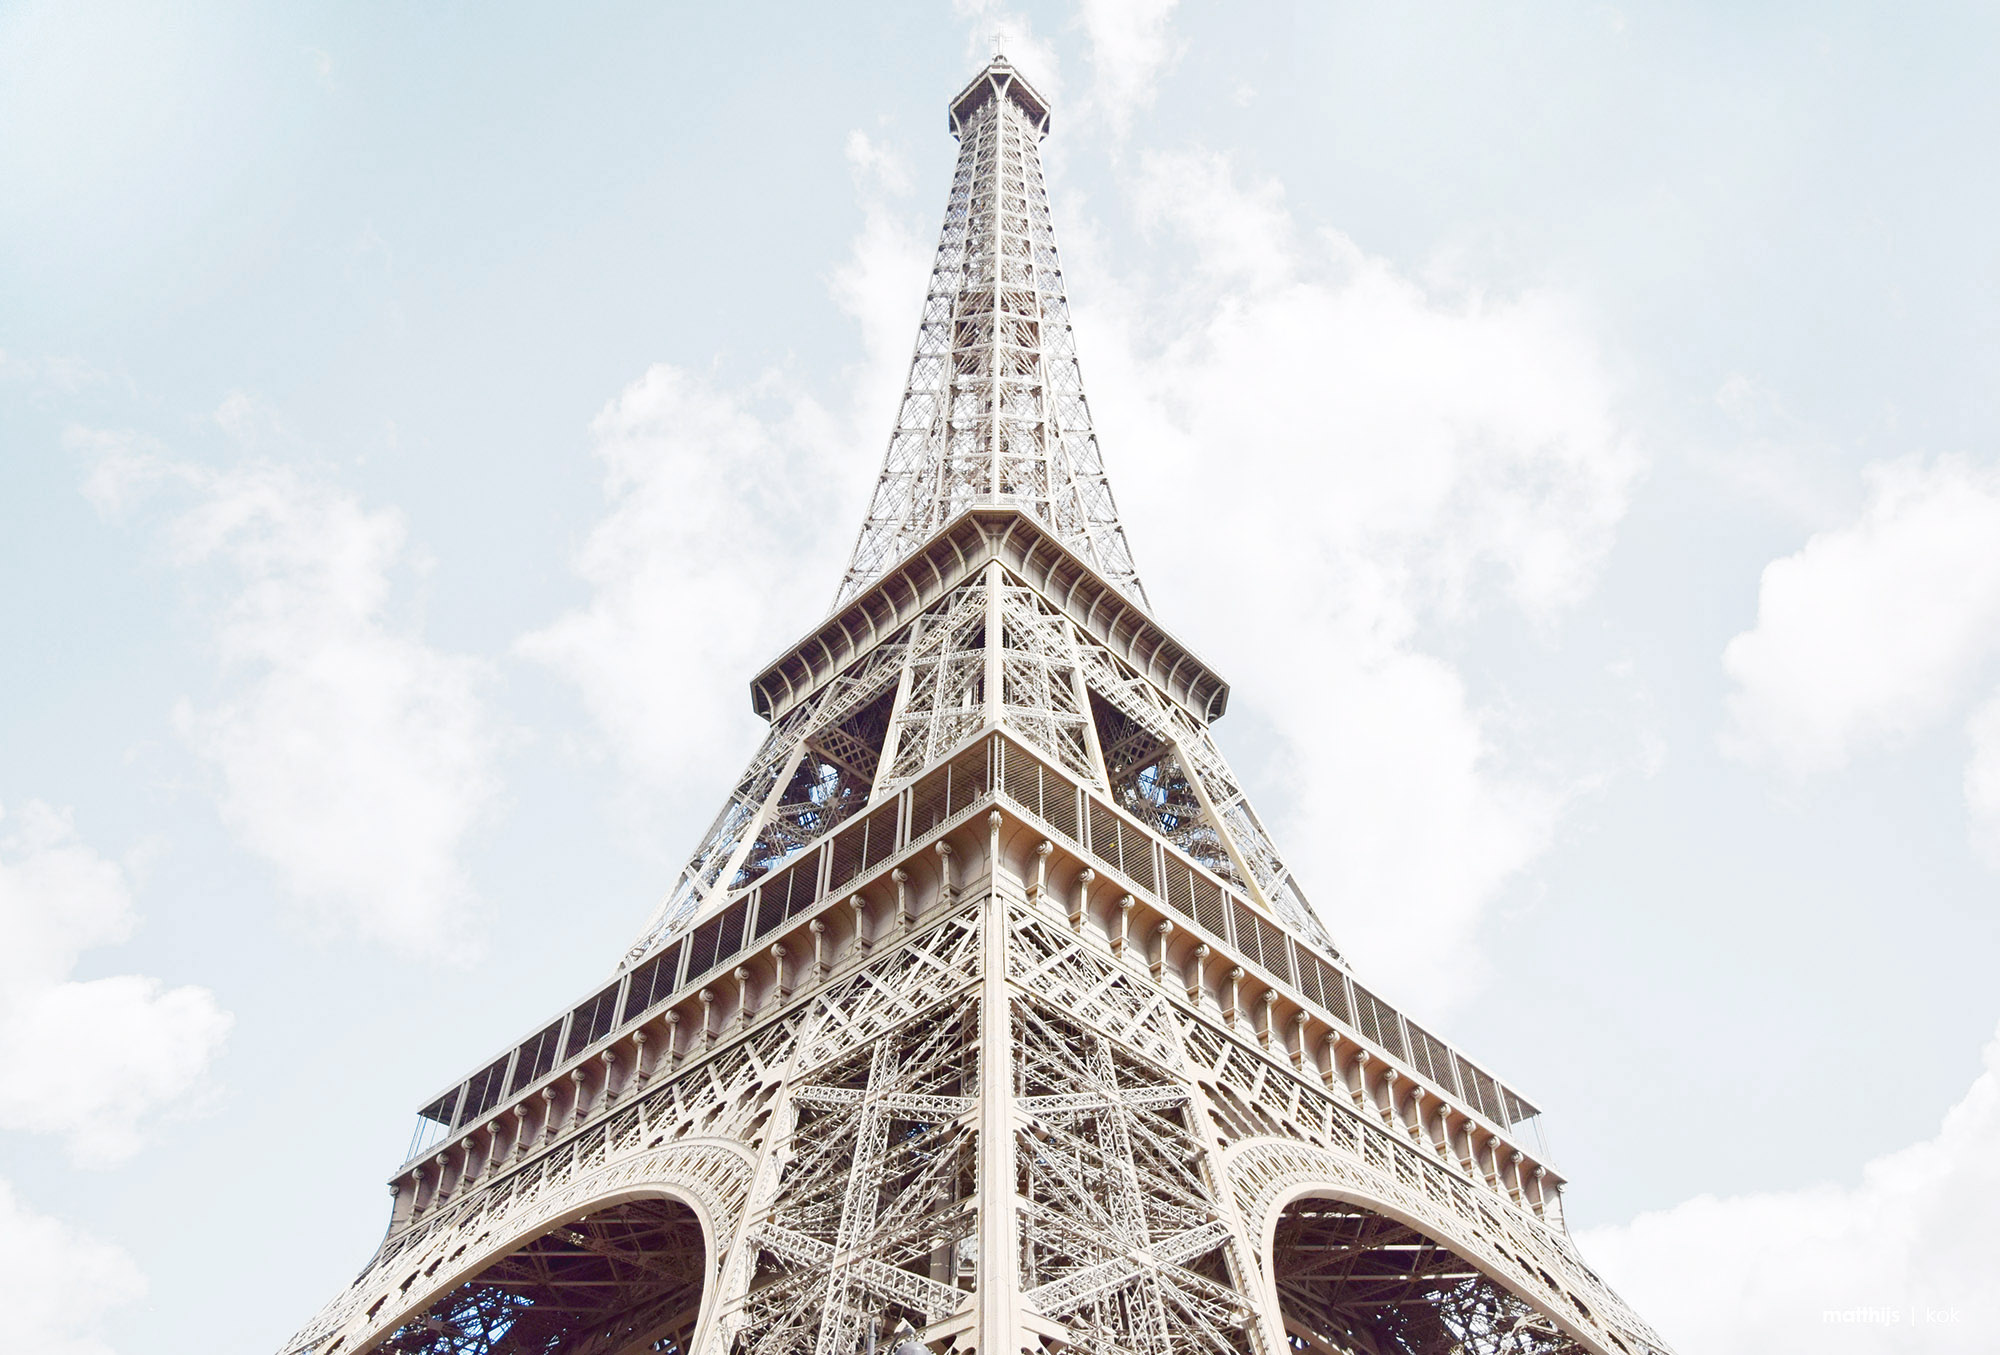 Eiffel Tower, Paris | Photo by Matthijs Kok